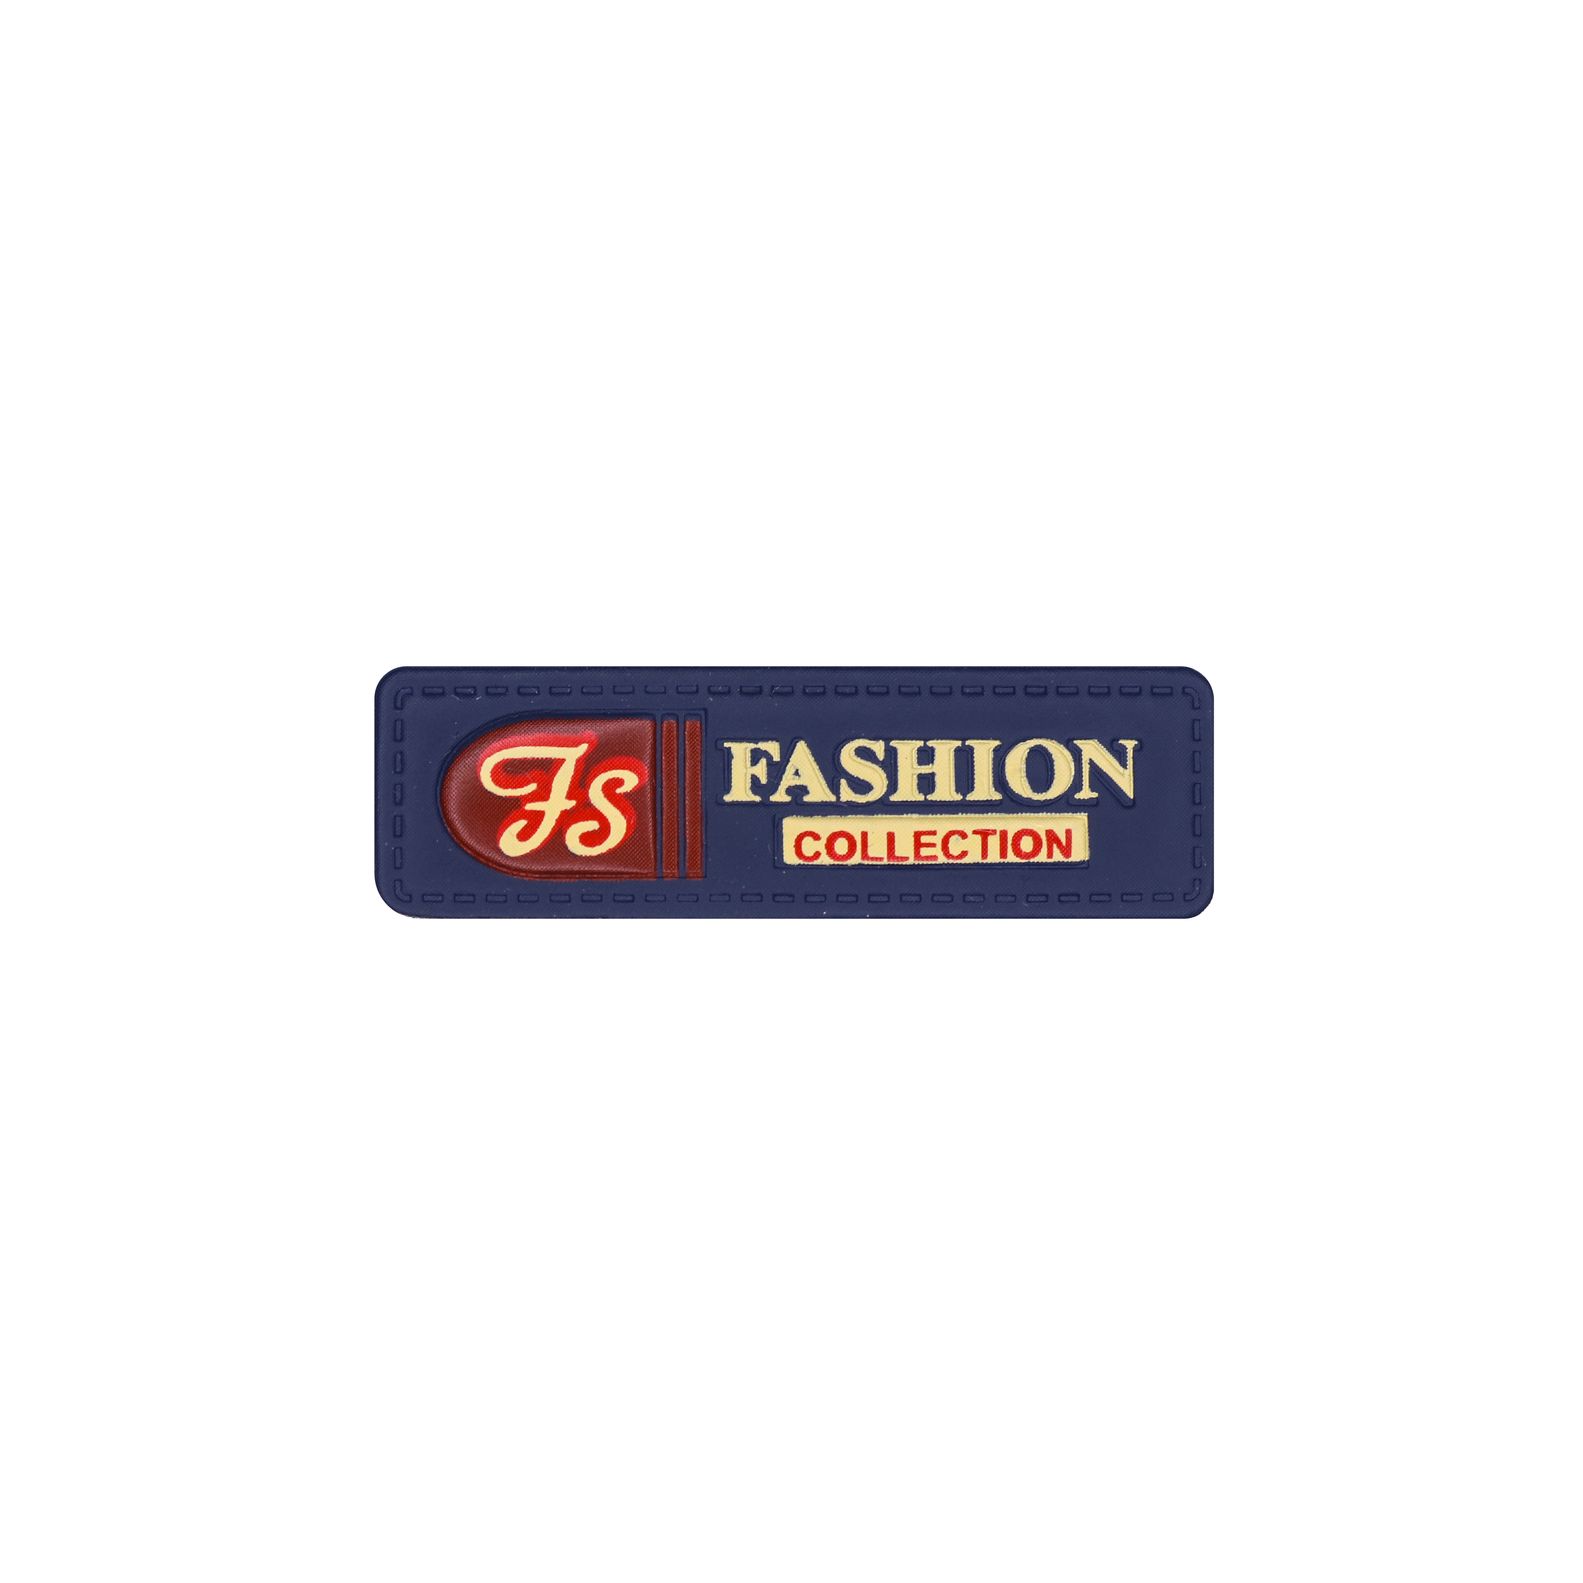   . 25 ( 10) 3814  FS Fashion Collection